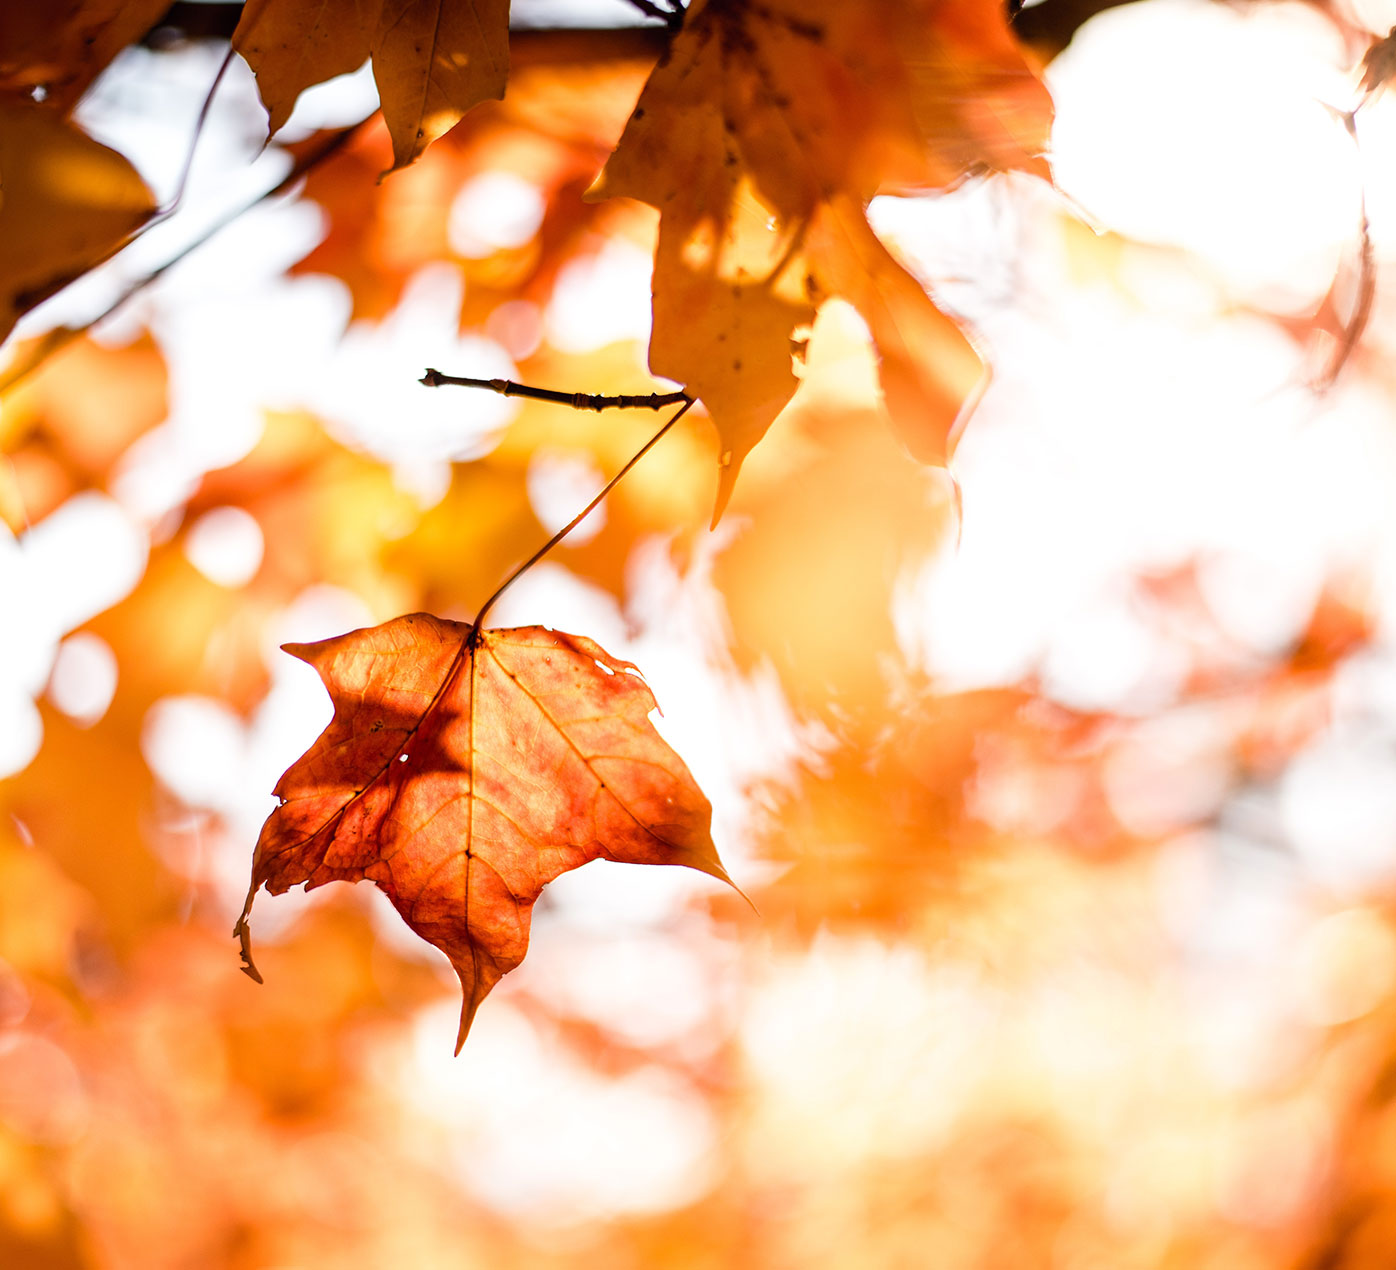 Light shining through fall leaves on a tree